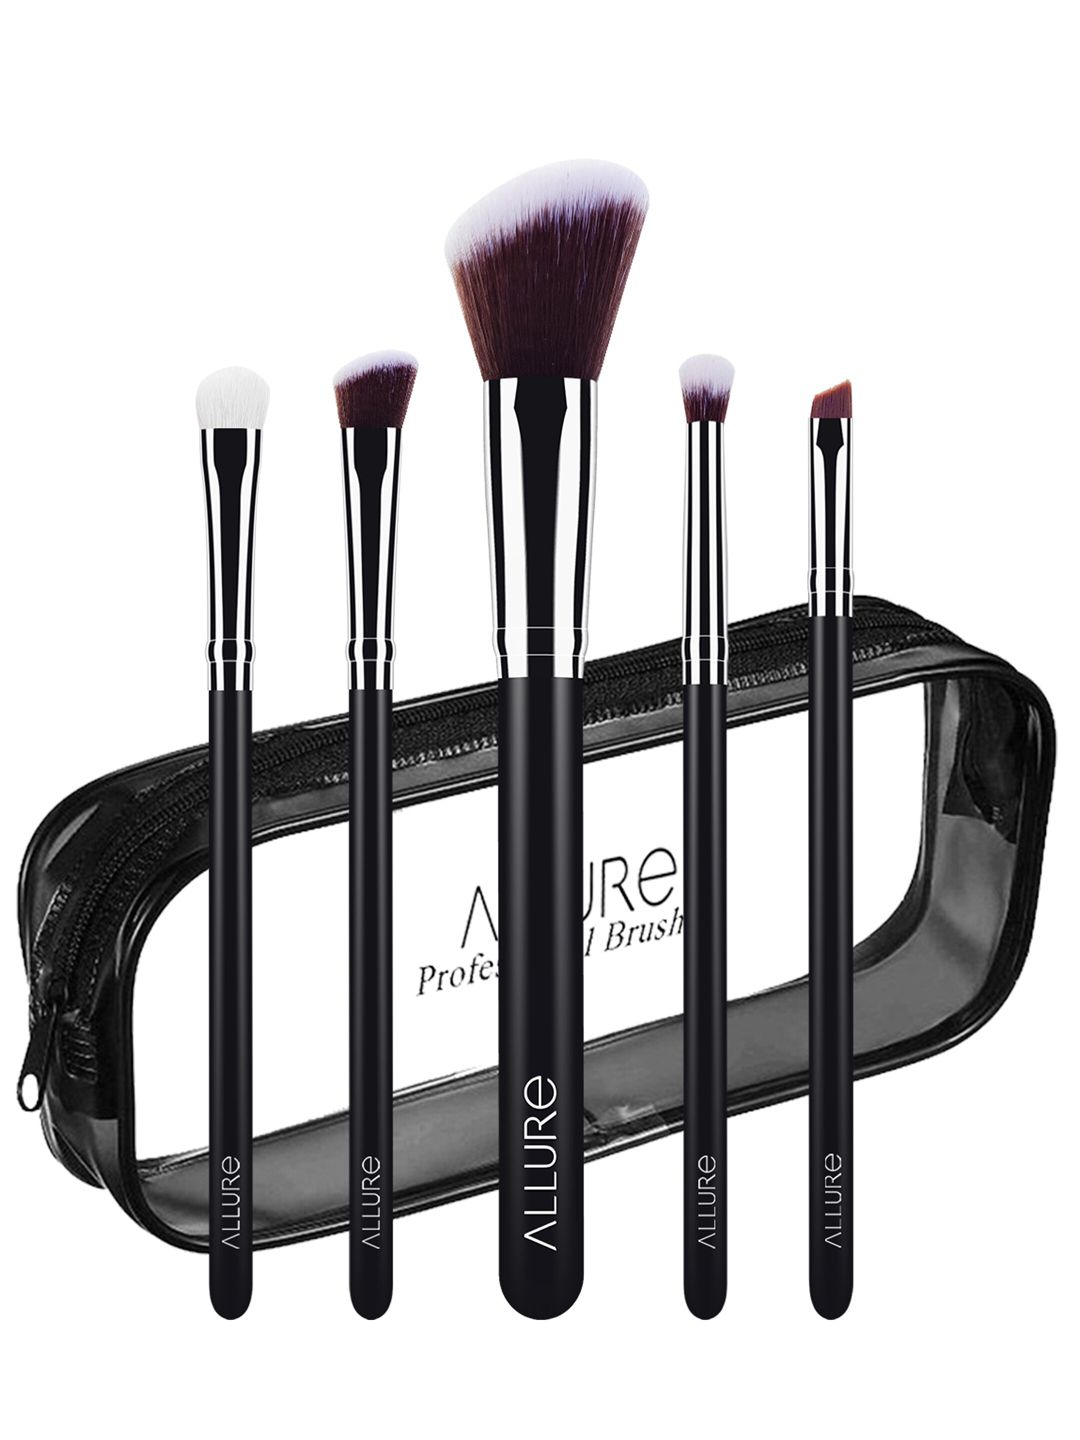 ALLURE SSK-05 Set of 5 Makeup Brushes - Black Price in India